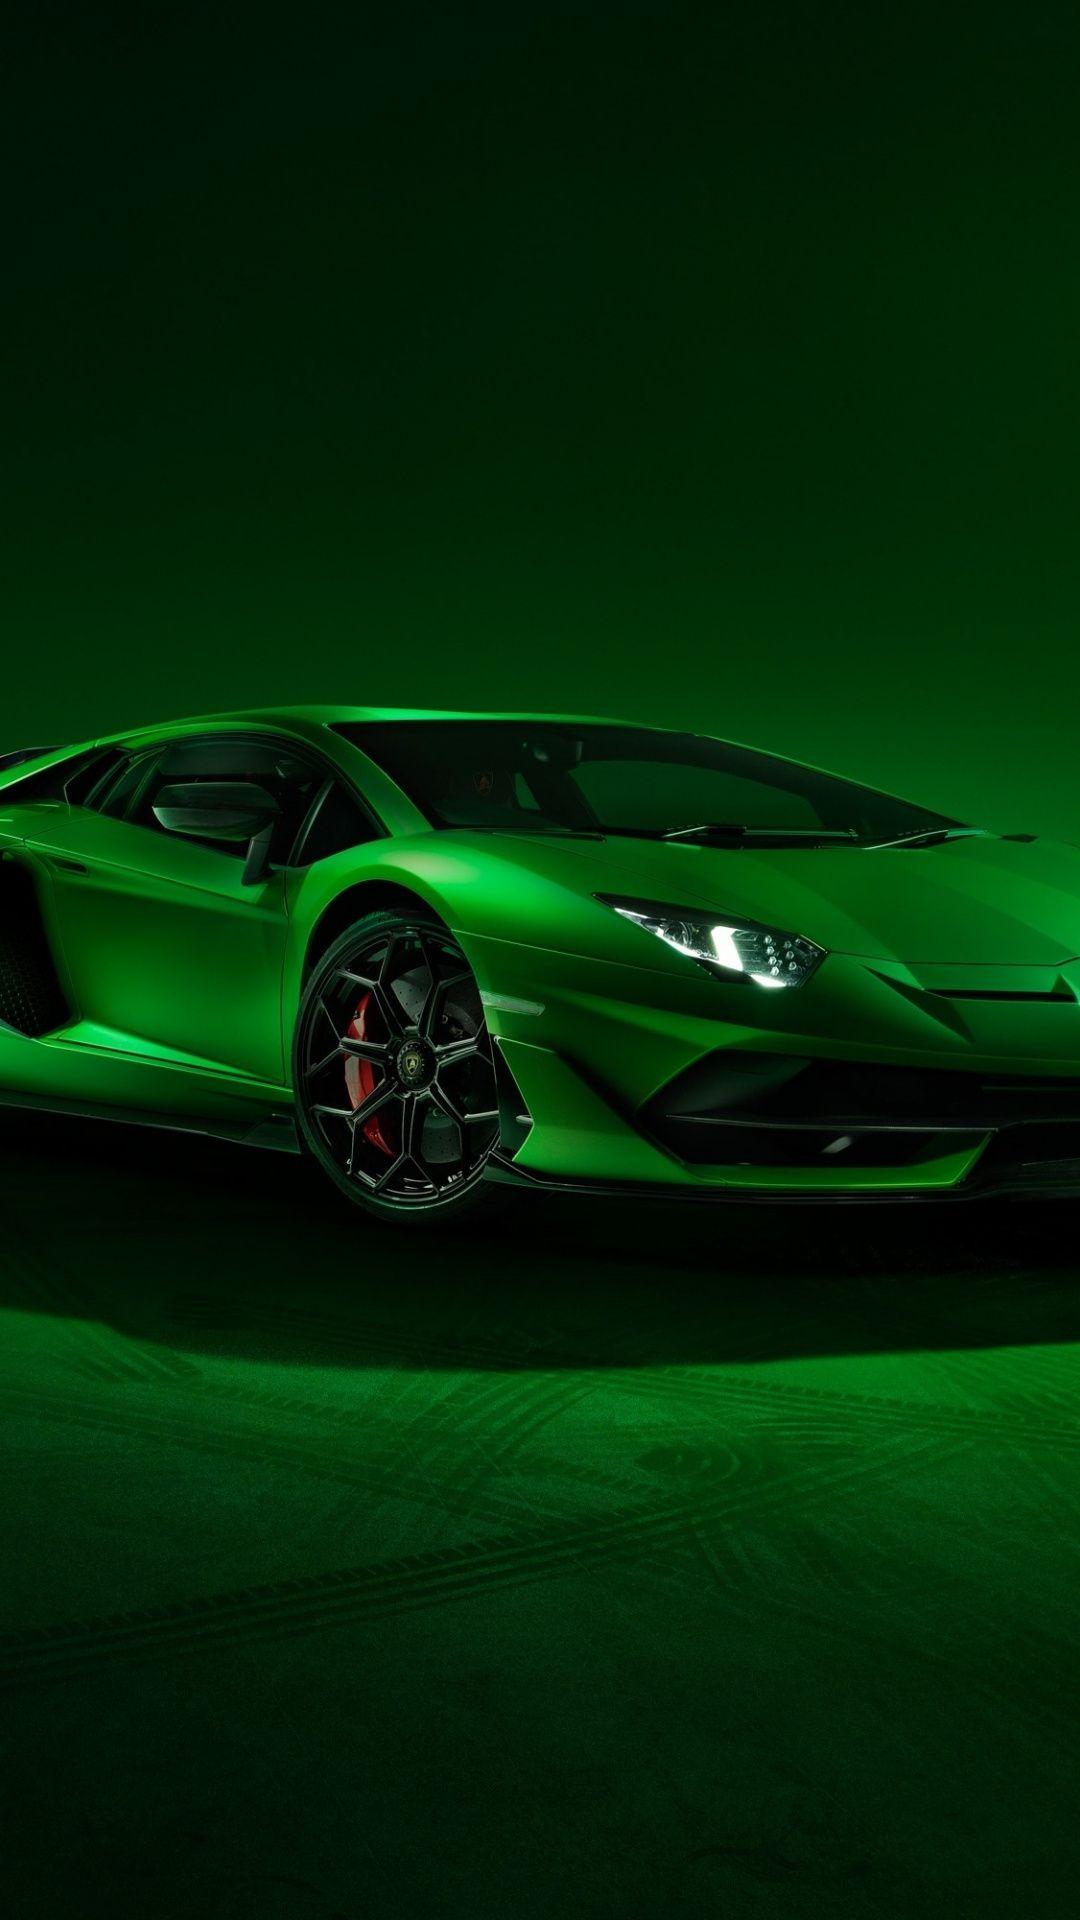 Lamborghini Aventador SVJ, sports car, green, 1080x1920 wallpaper. Car wallpaper, Sports car wallpaper, Green lamborghini